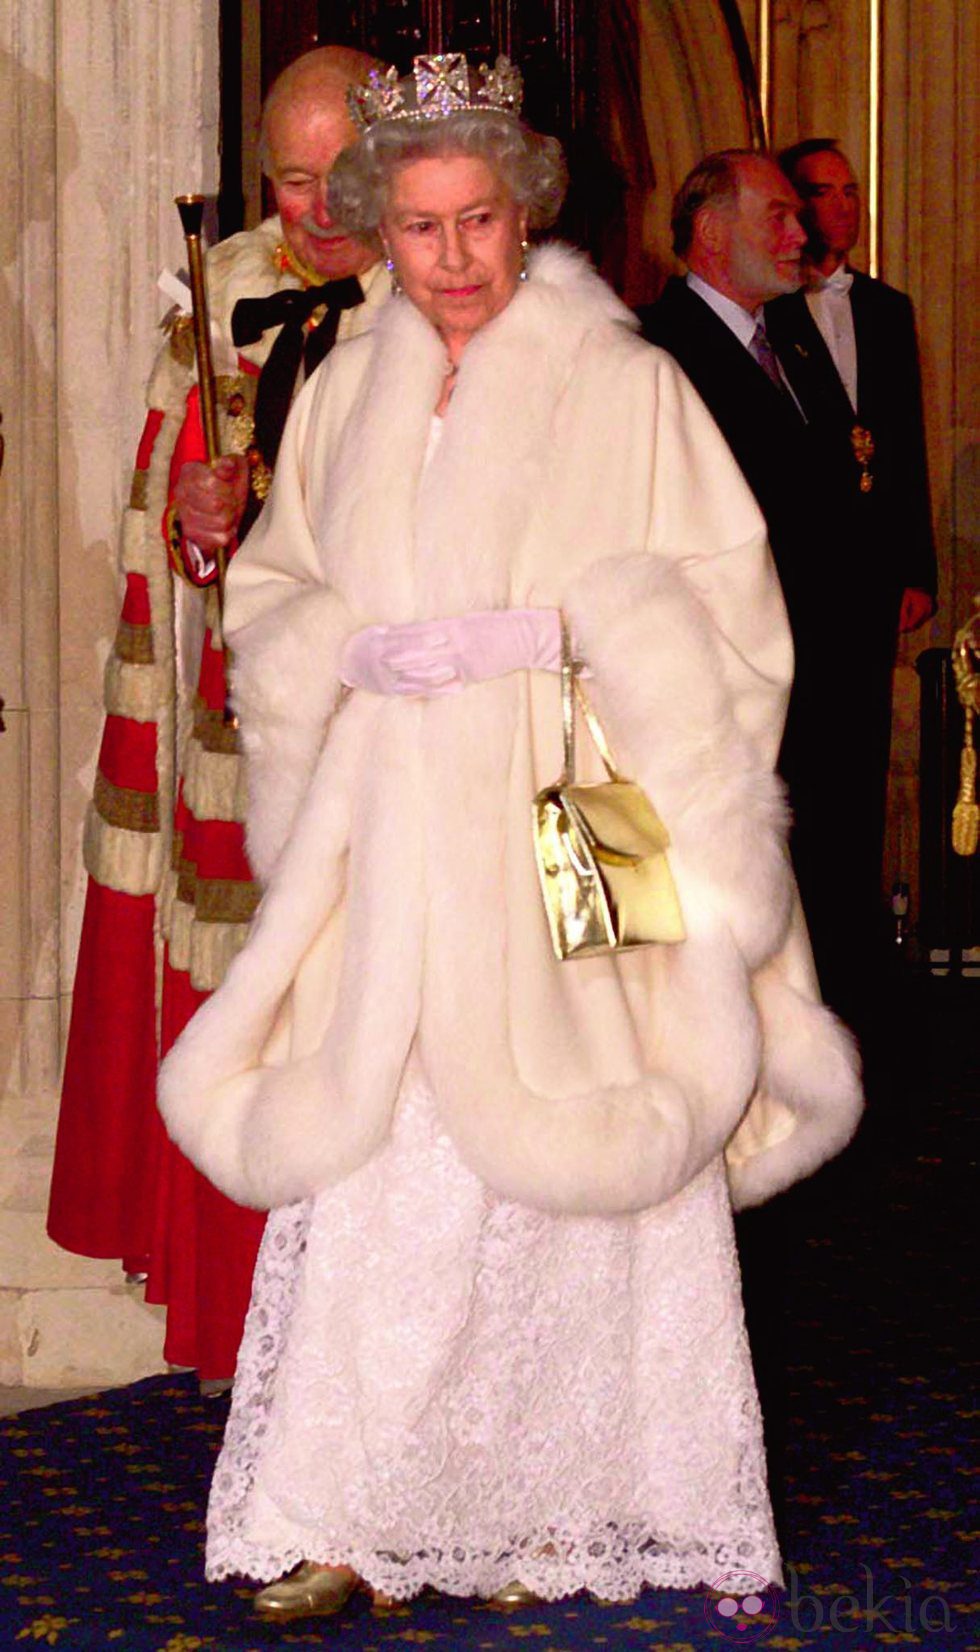 La Reina Isabel II en la apertura del Parlamento en 1998